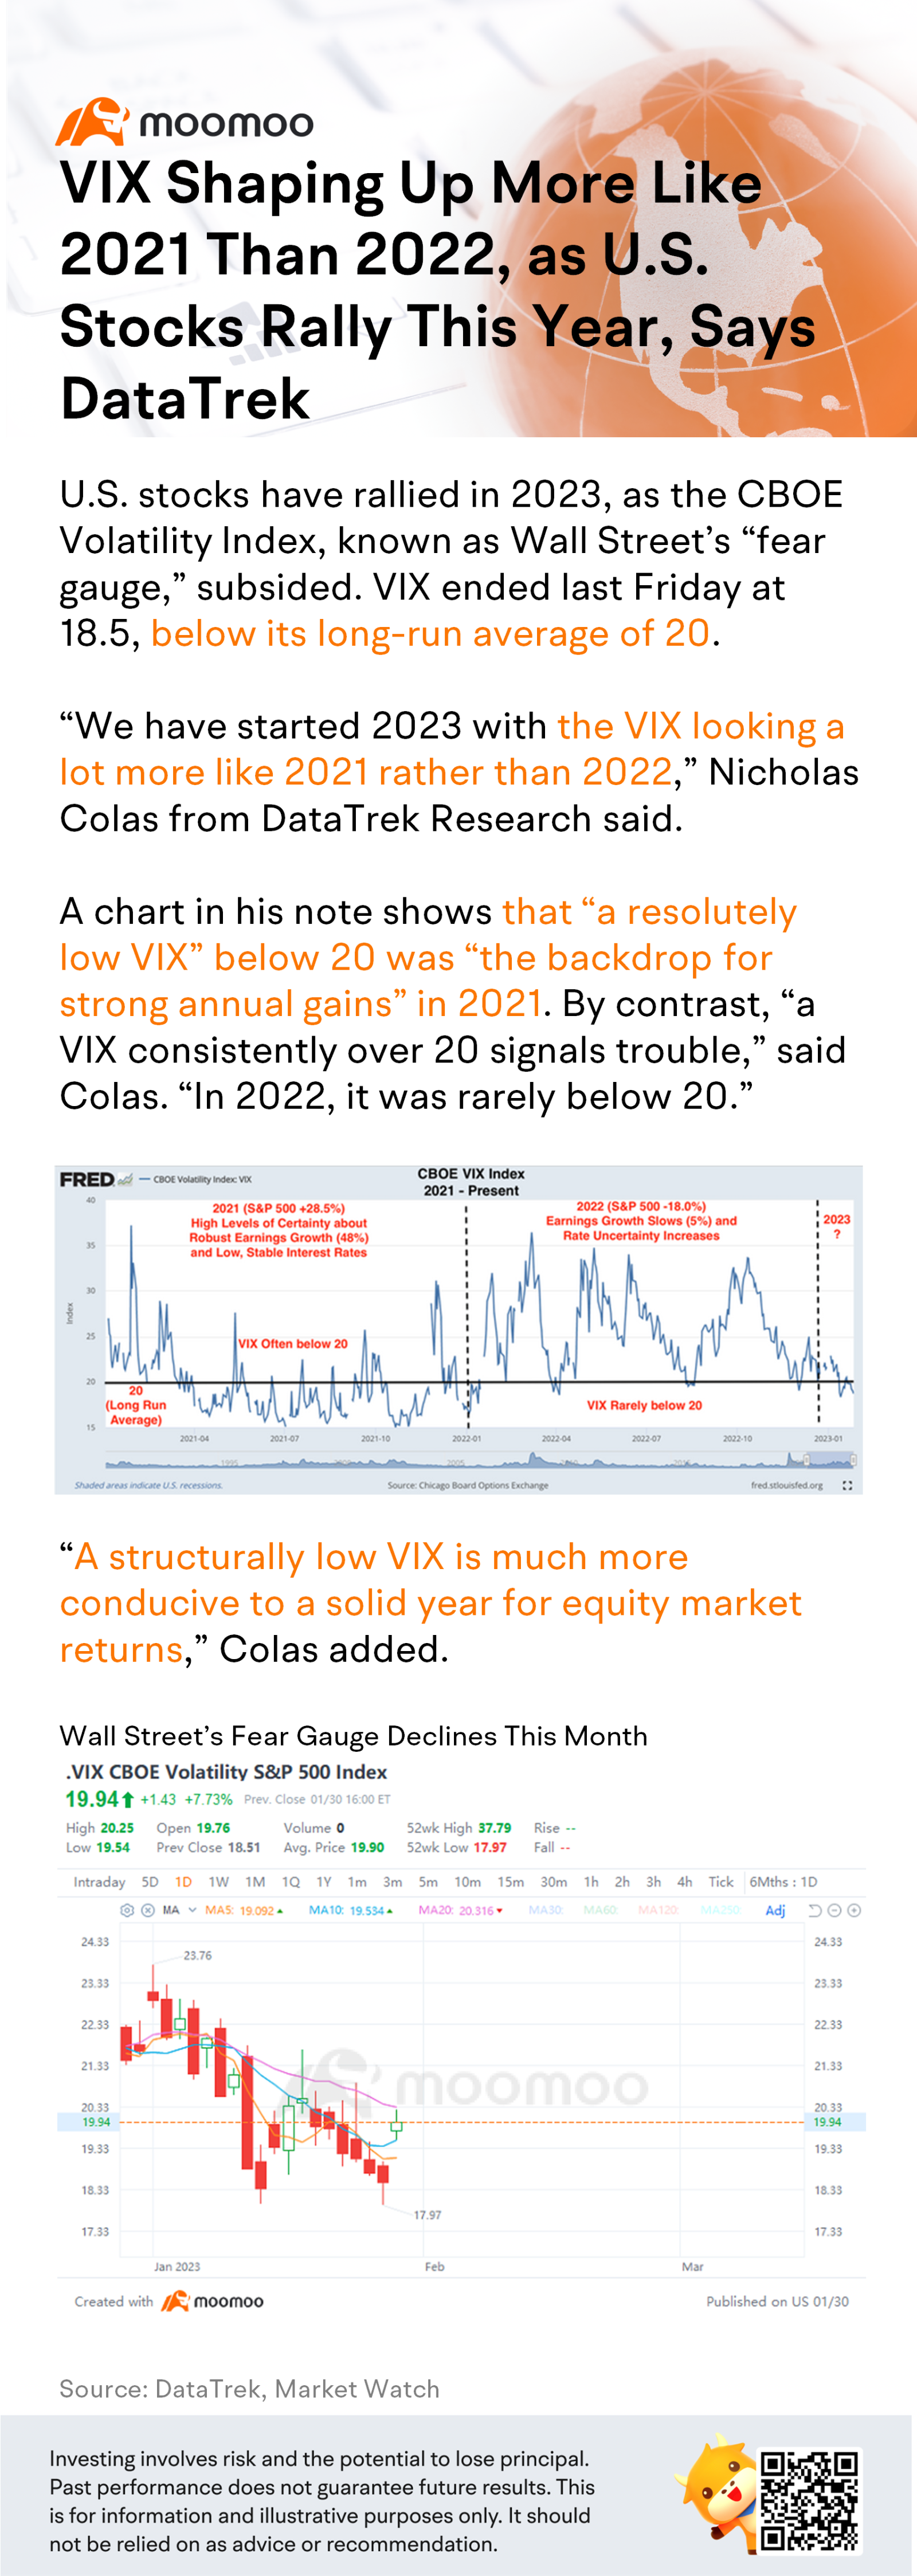 VIX Shaping Up More Like 2021 Than 2022, as U.S. Stocks Rally This Year, Says DataTrek